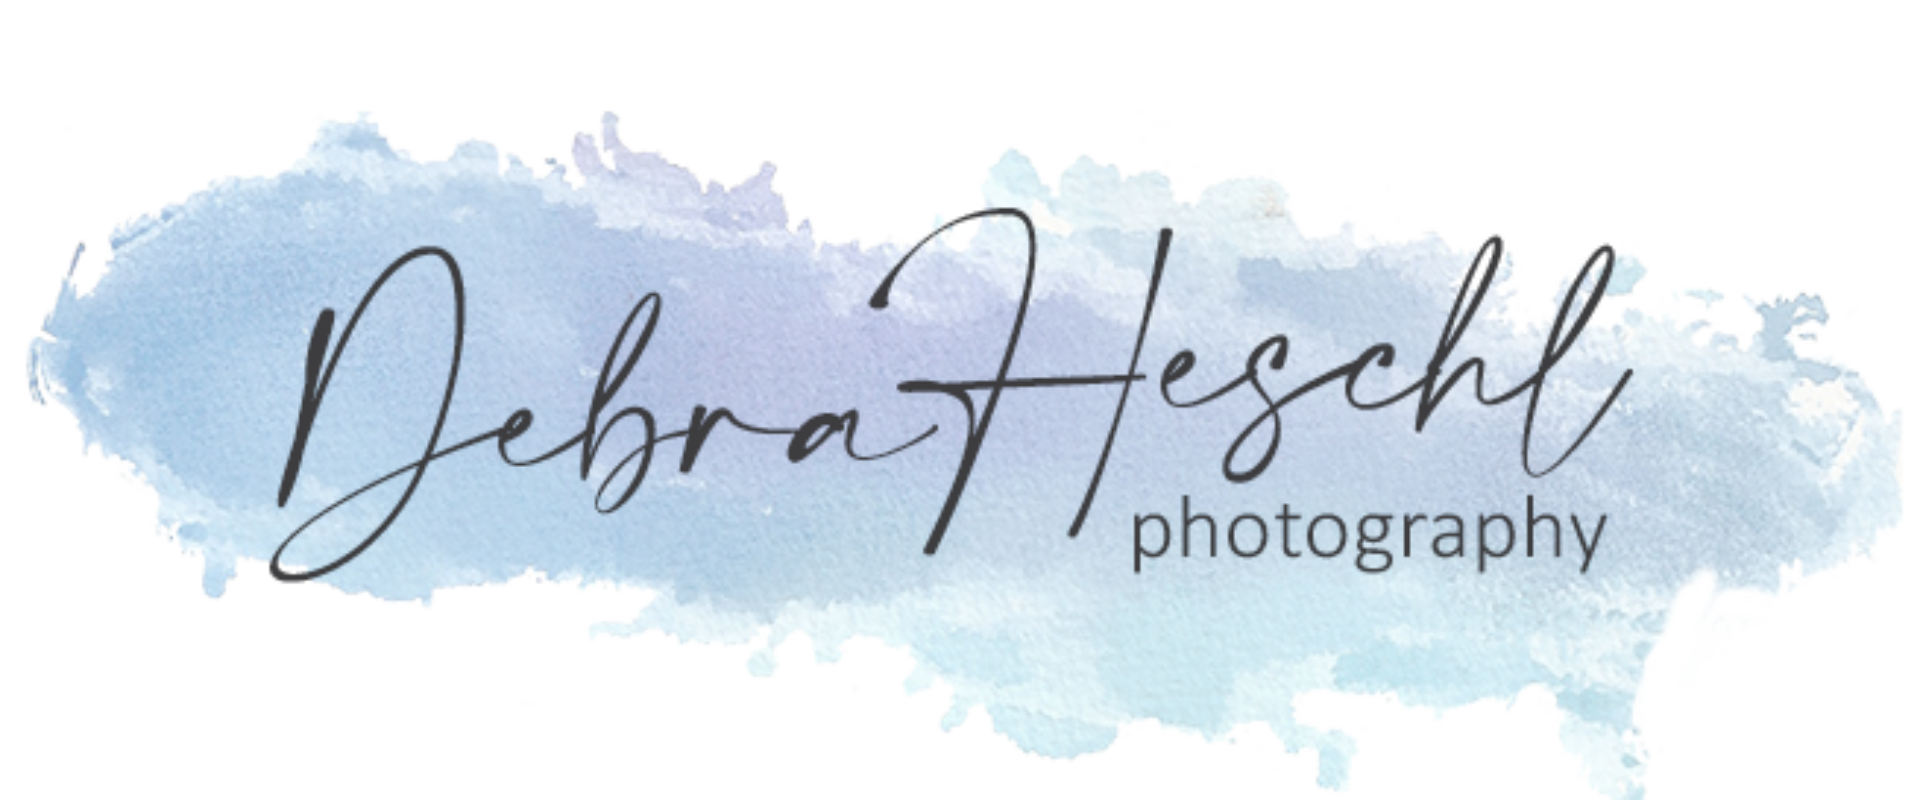 Debra Heschl Photography logo